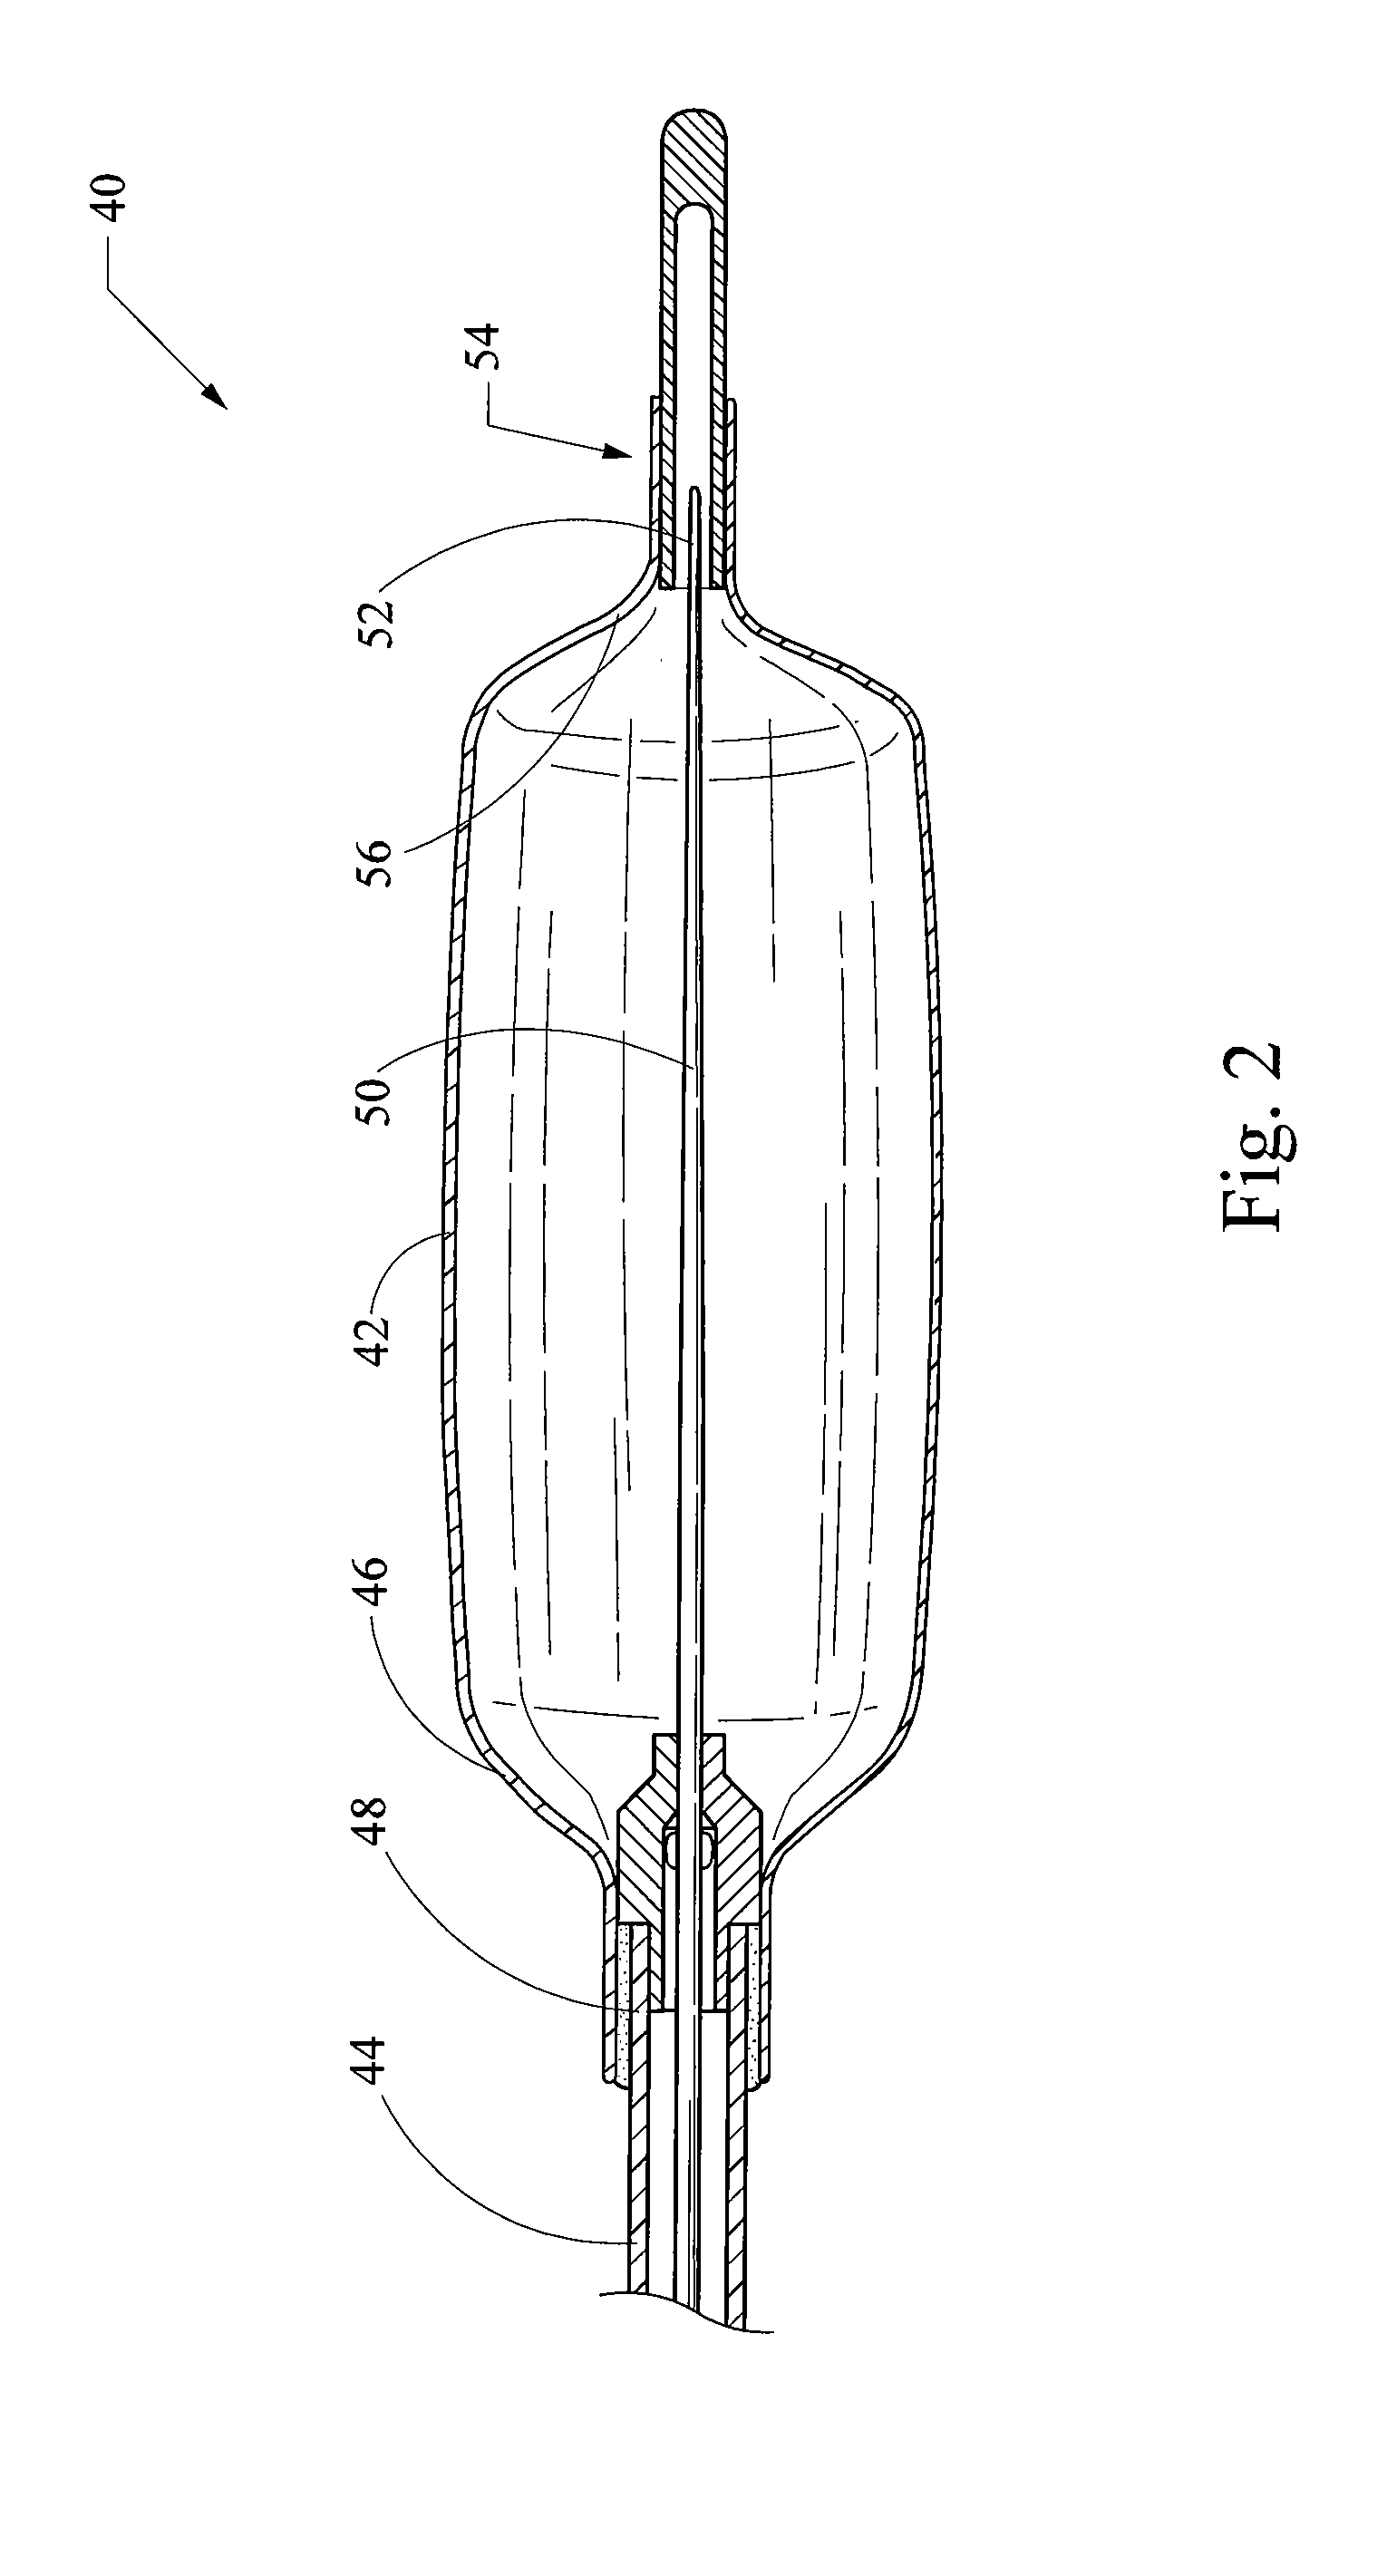 Balloon folding control mechanism